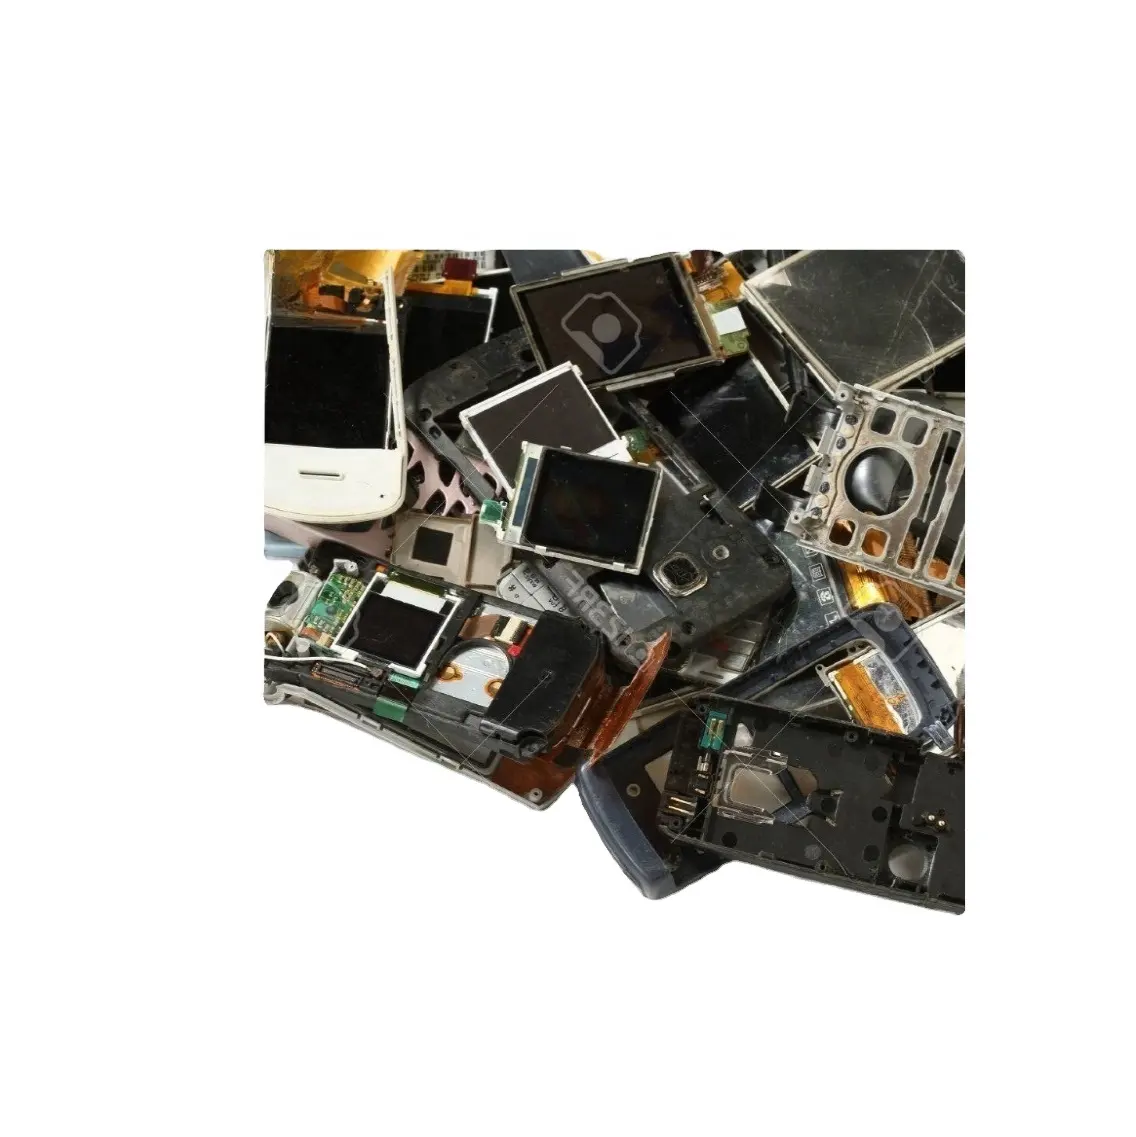 buyers of scrap mobile phones scrap mobile phones for sale supplier motherboard scrap mobile phones for sale